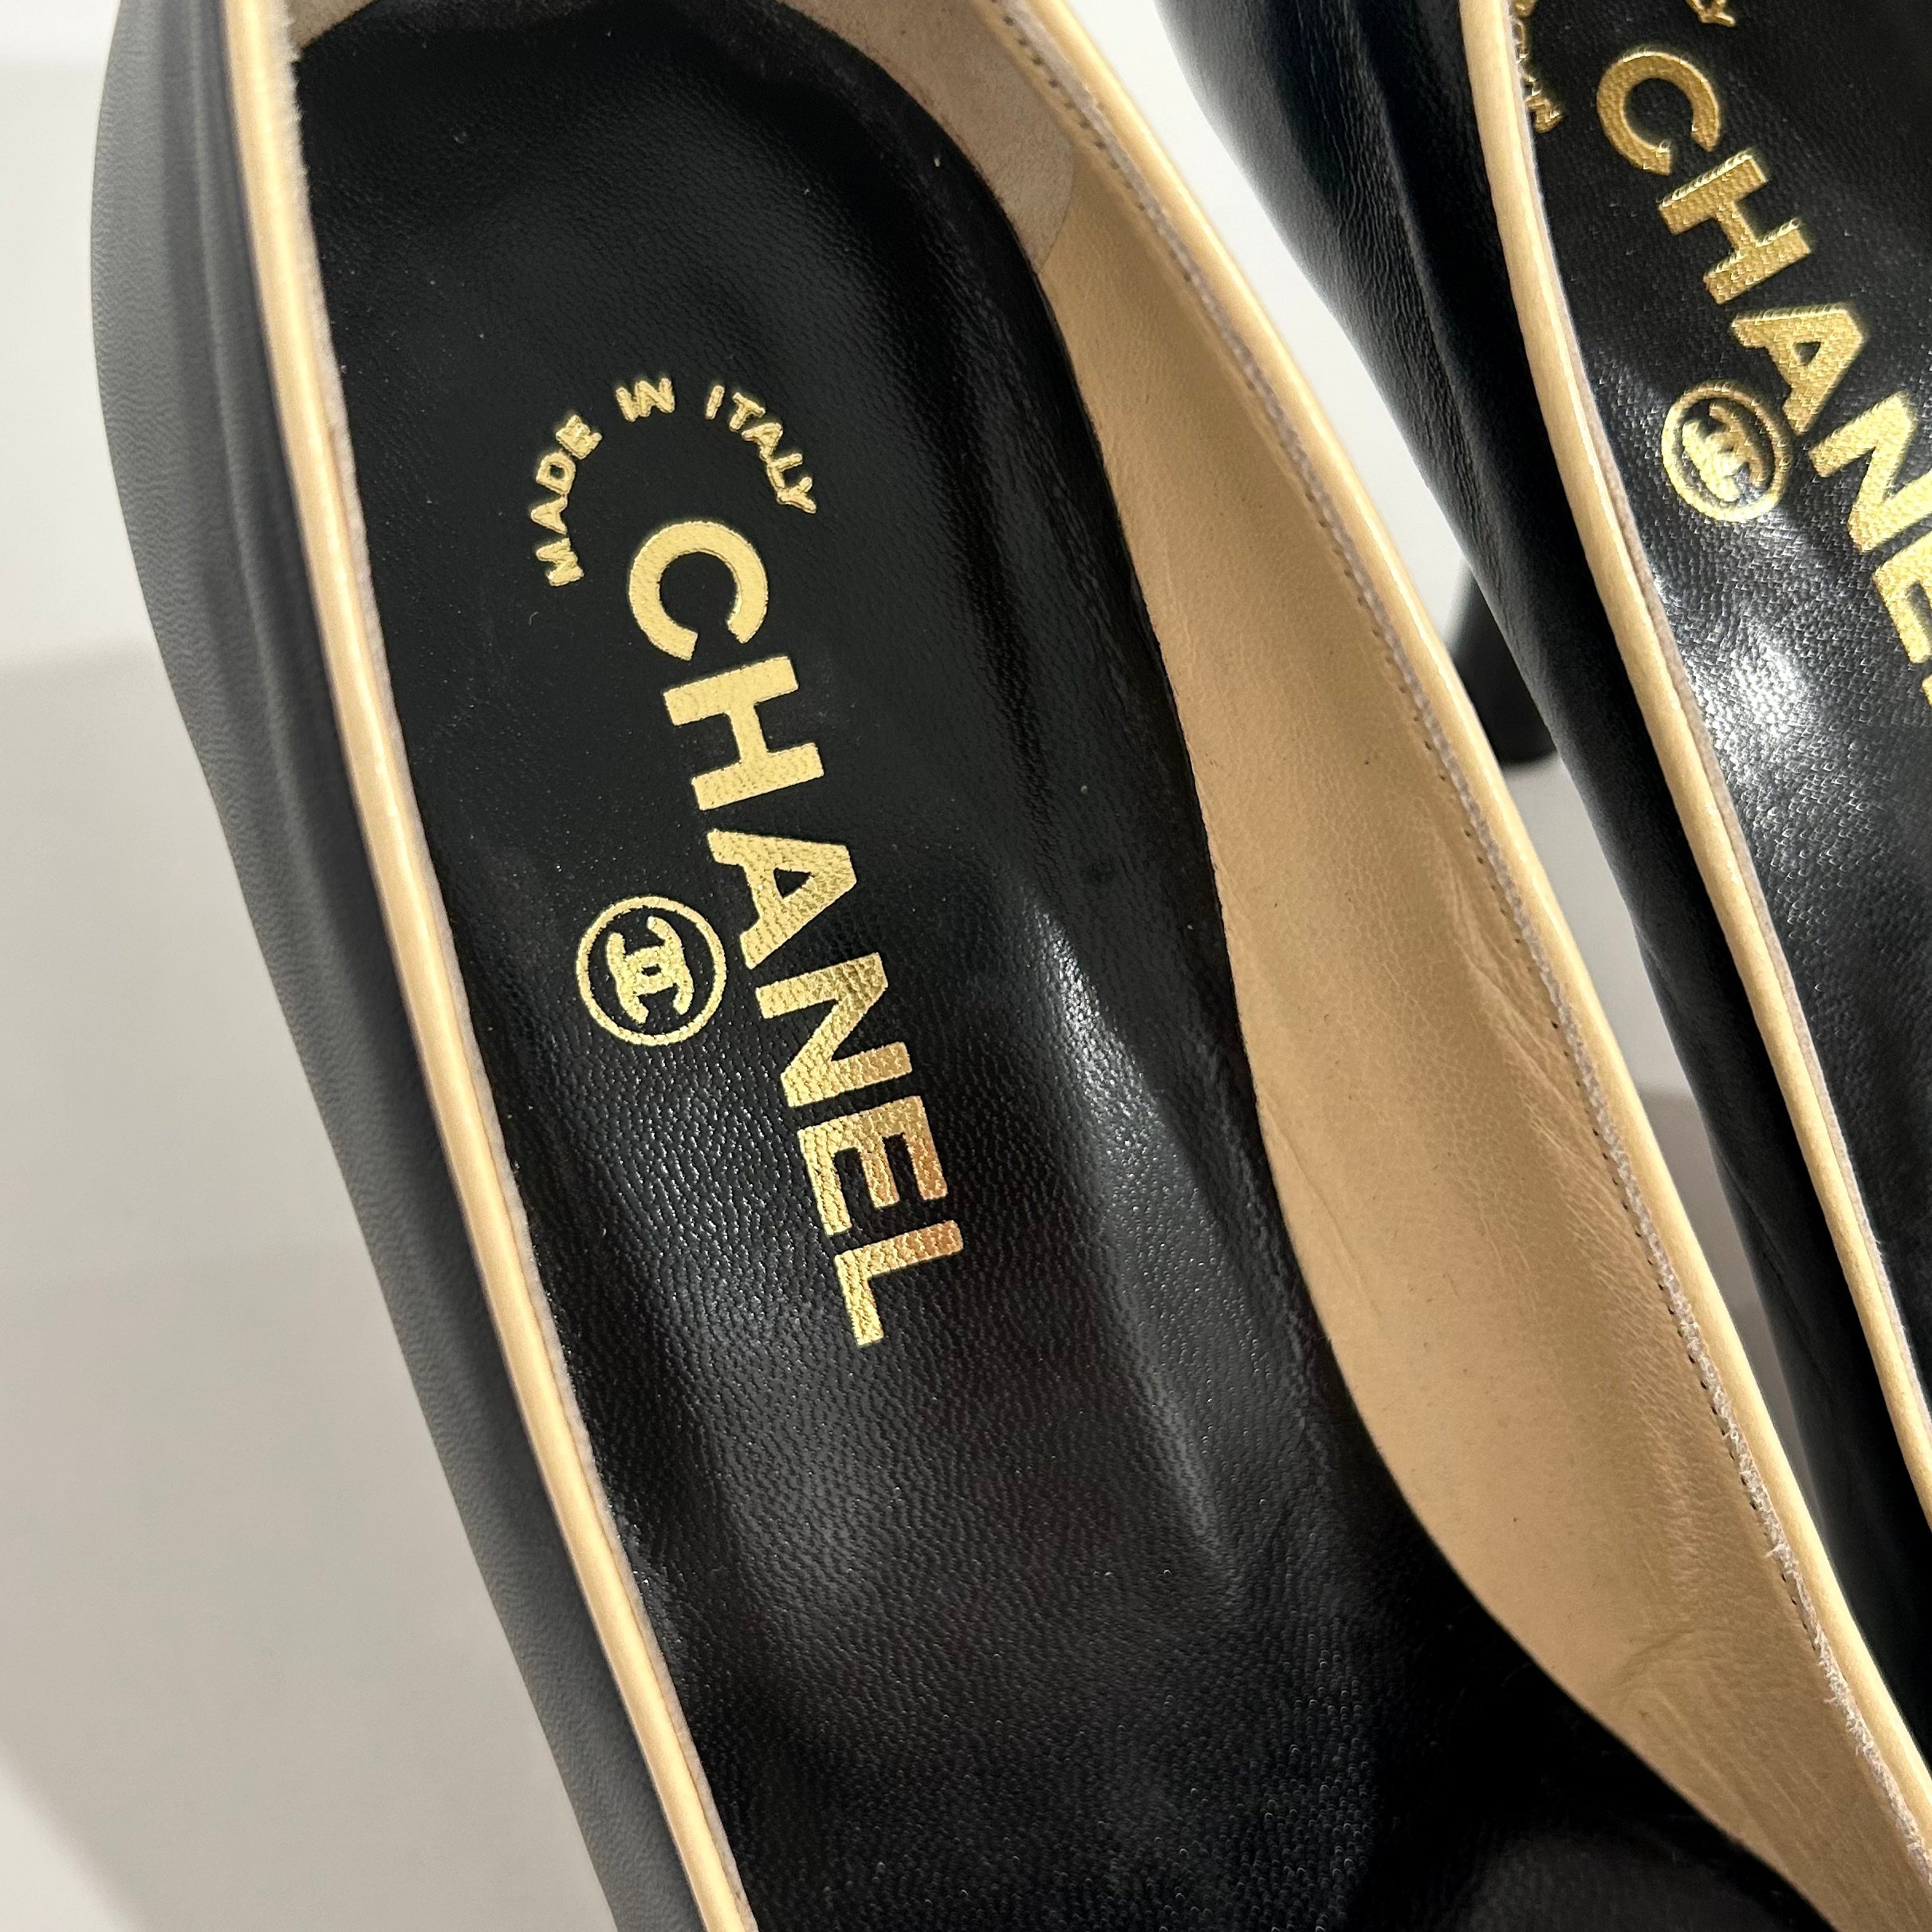 Chanel Black & Cream Cap Toe Heels